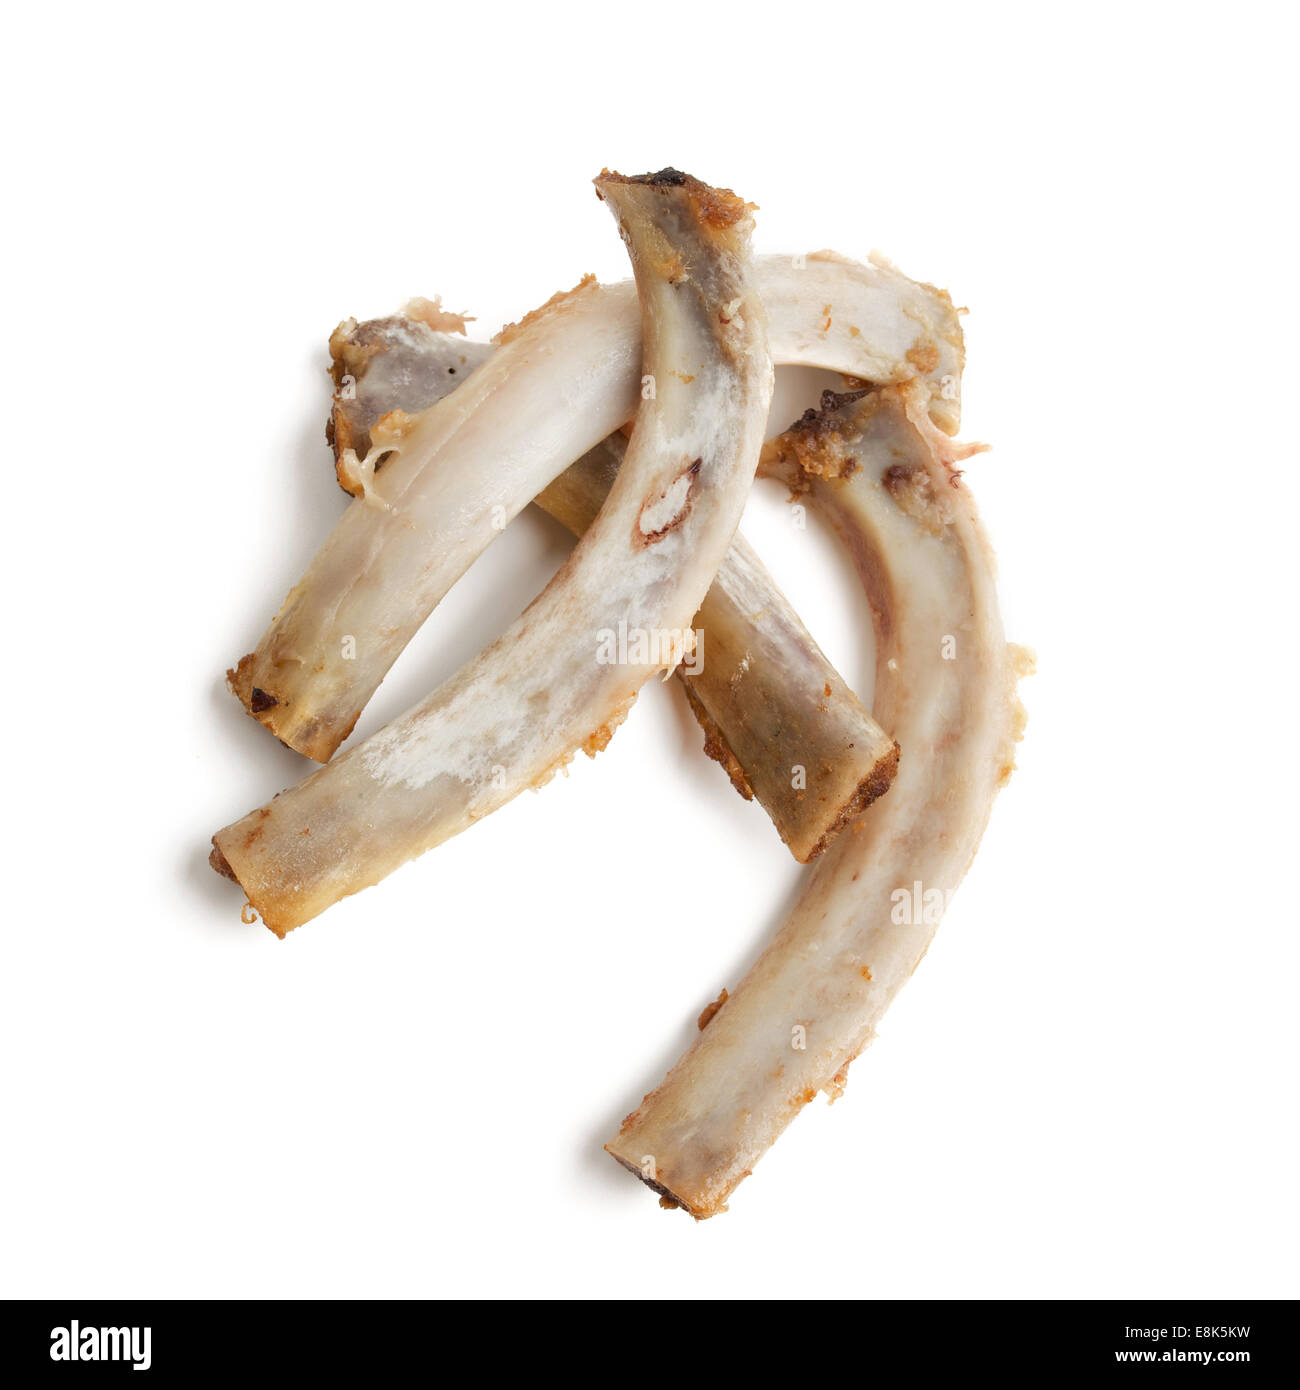 Pork rib bones on white background Stock Photo